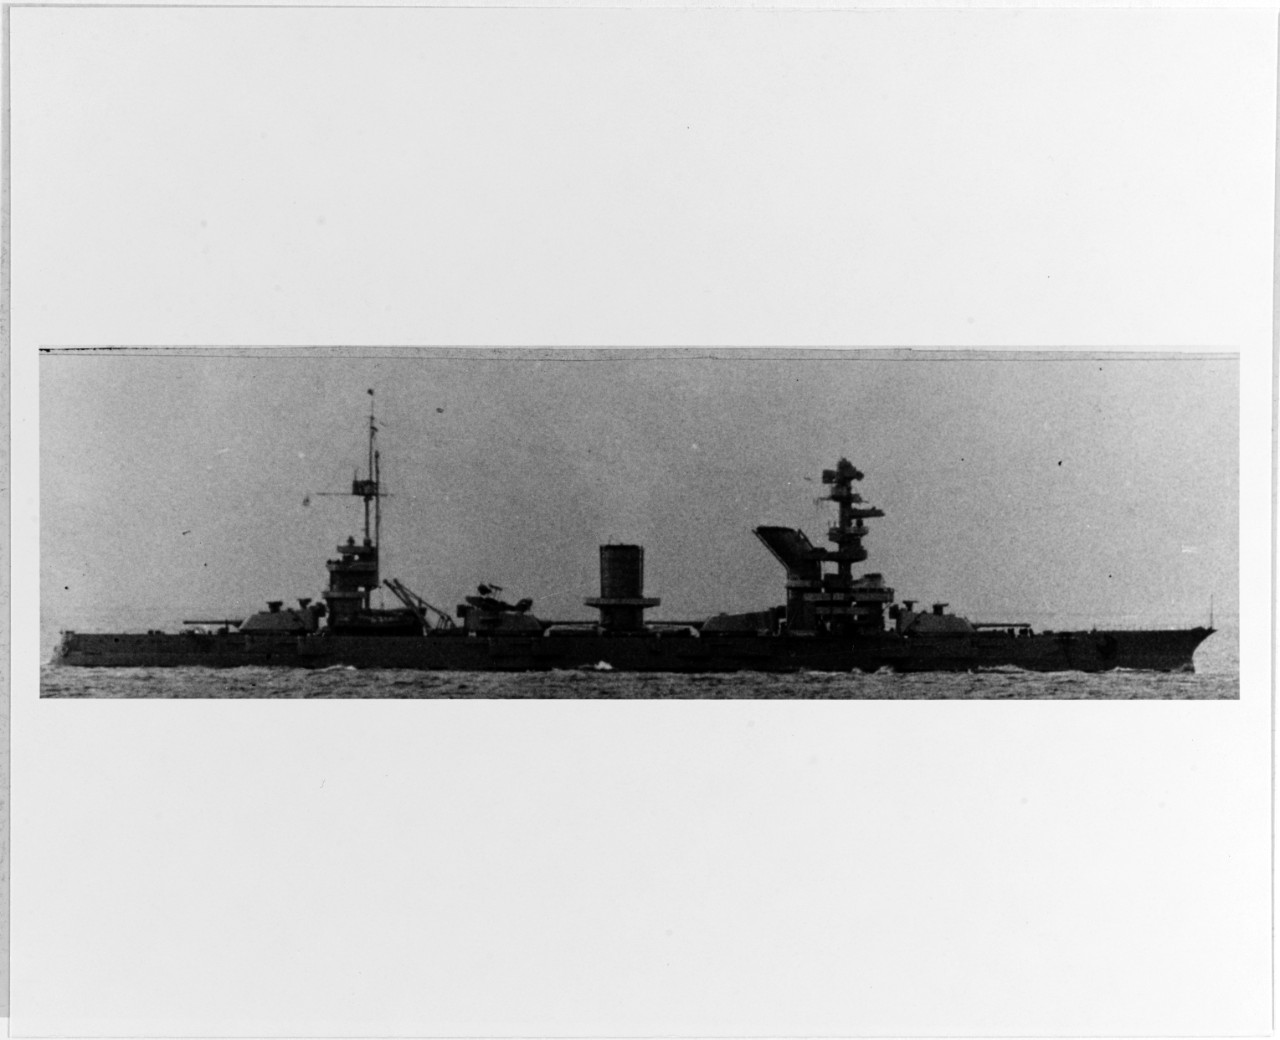 MARAT (Soviet Battleship, 1911-1941)